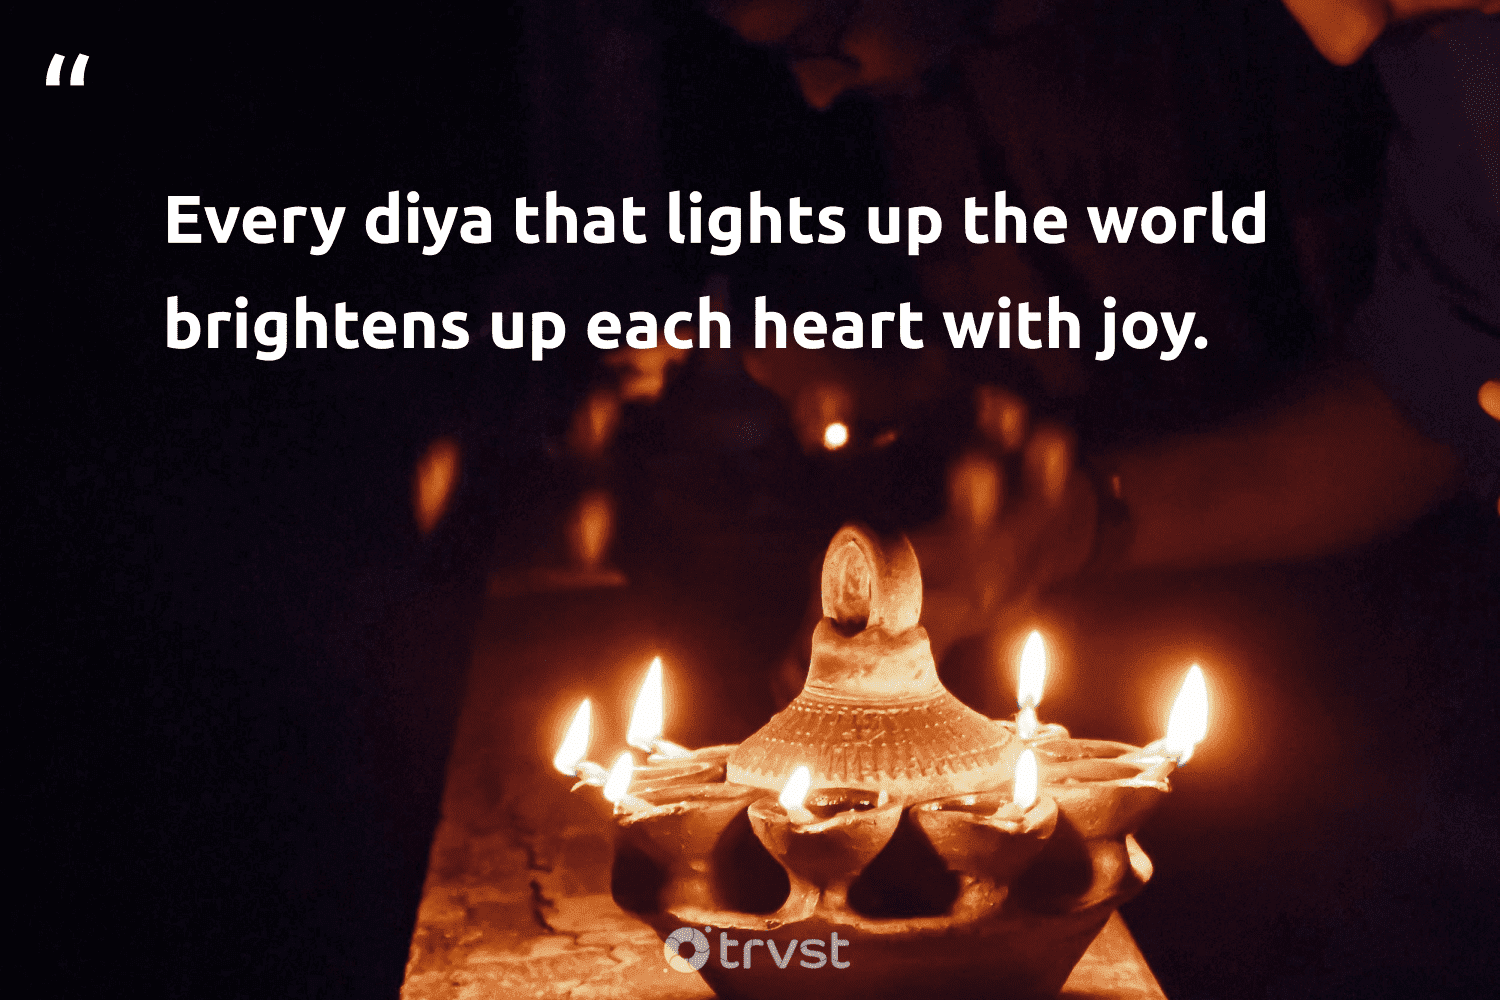 diwali quotes every diya that lights up 4037